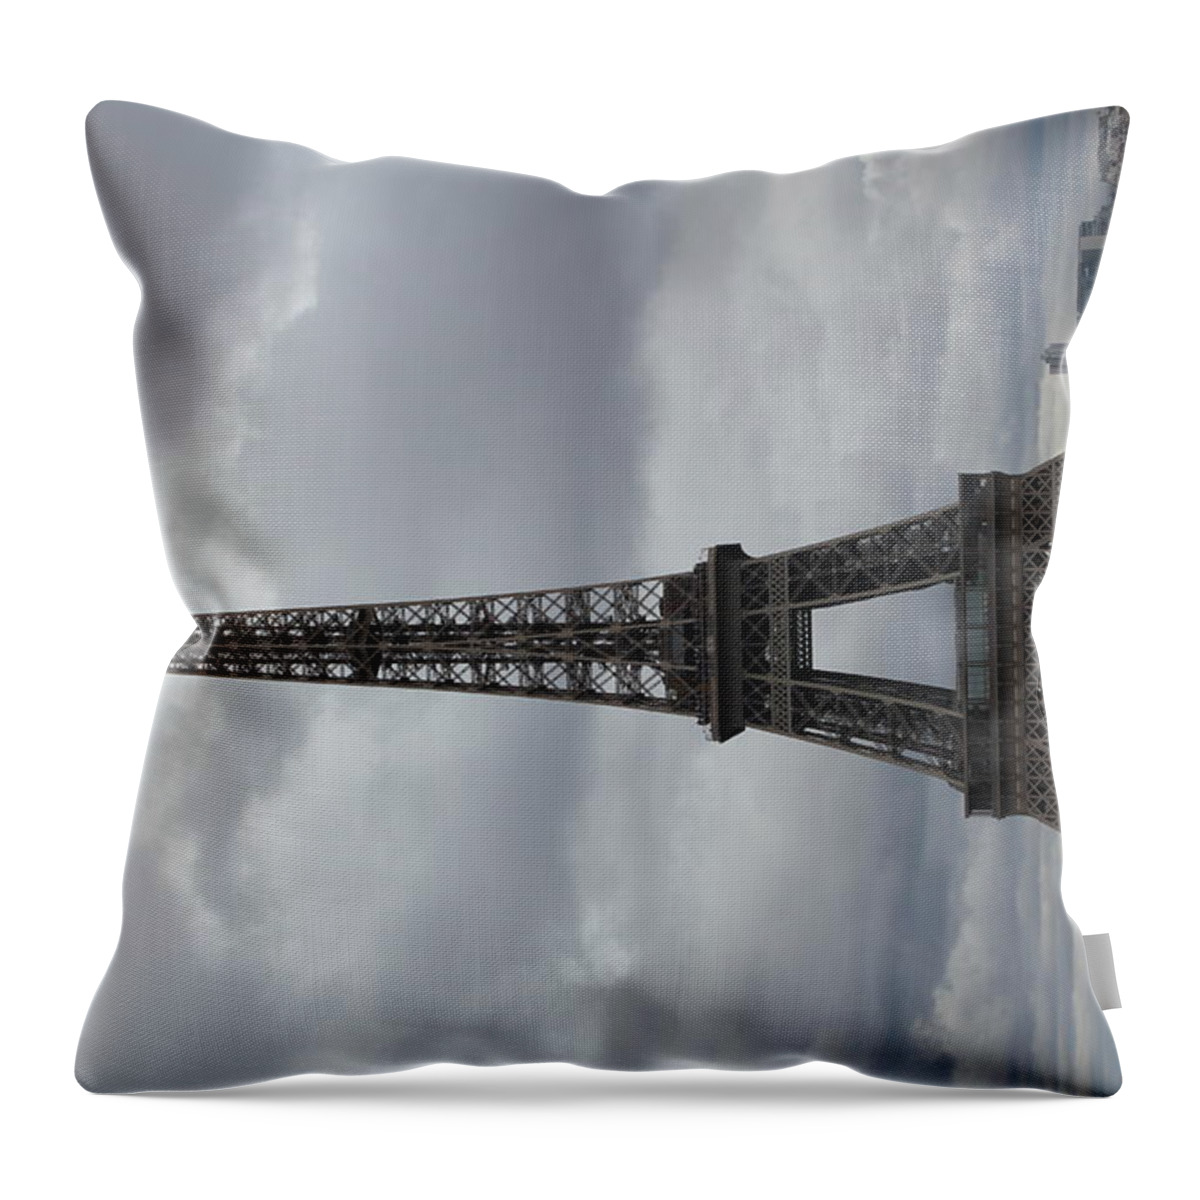 Paris Throw Pillow featuring the photograph Paris France by Reanne Cooper